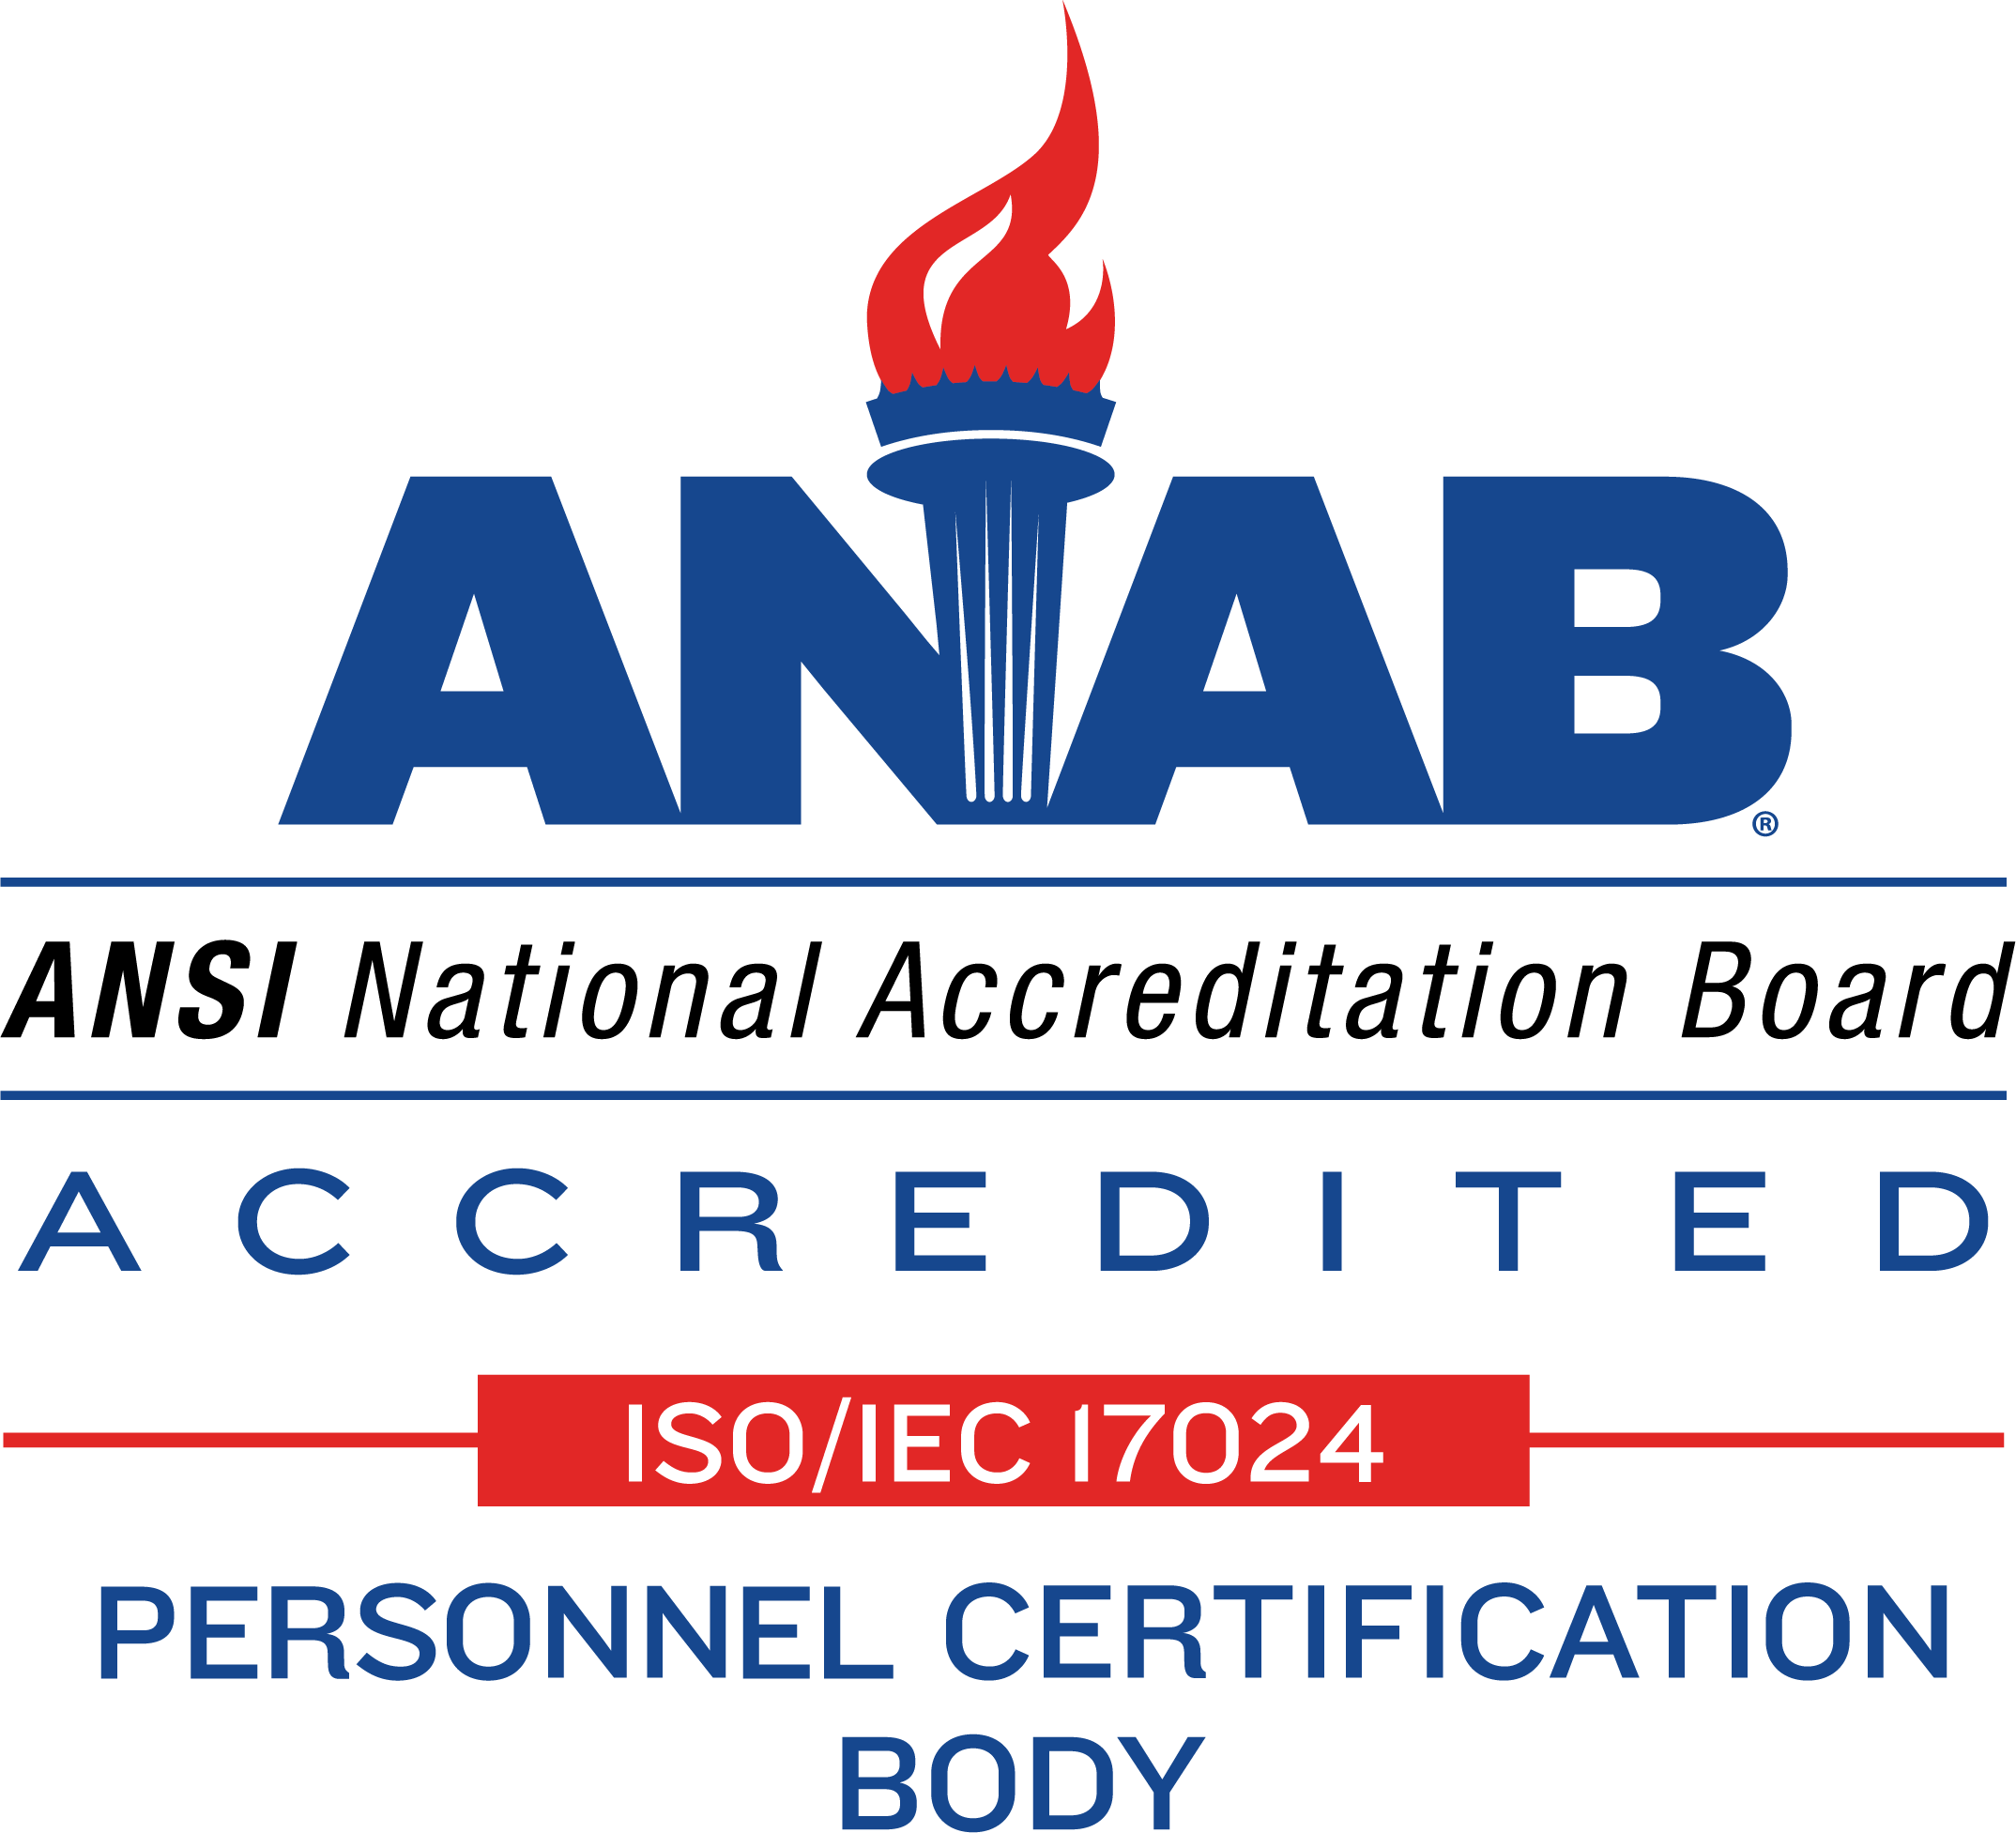 ANAB Symbol PMS 17024 Personnel Certification Body, Transparent Bkgr.png